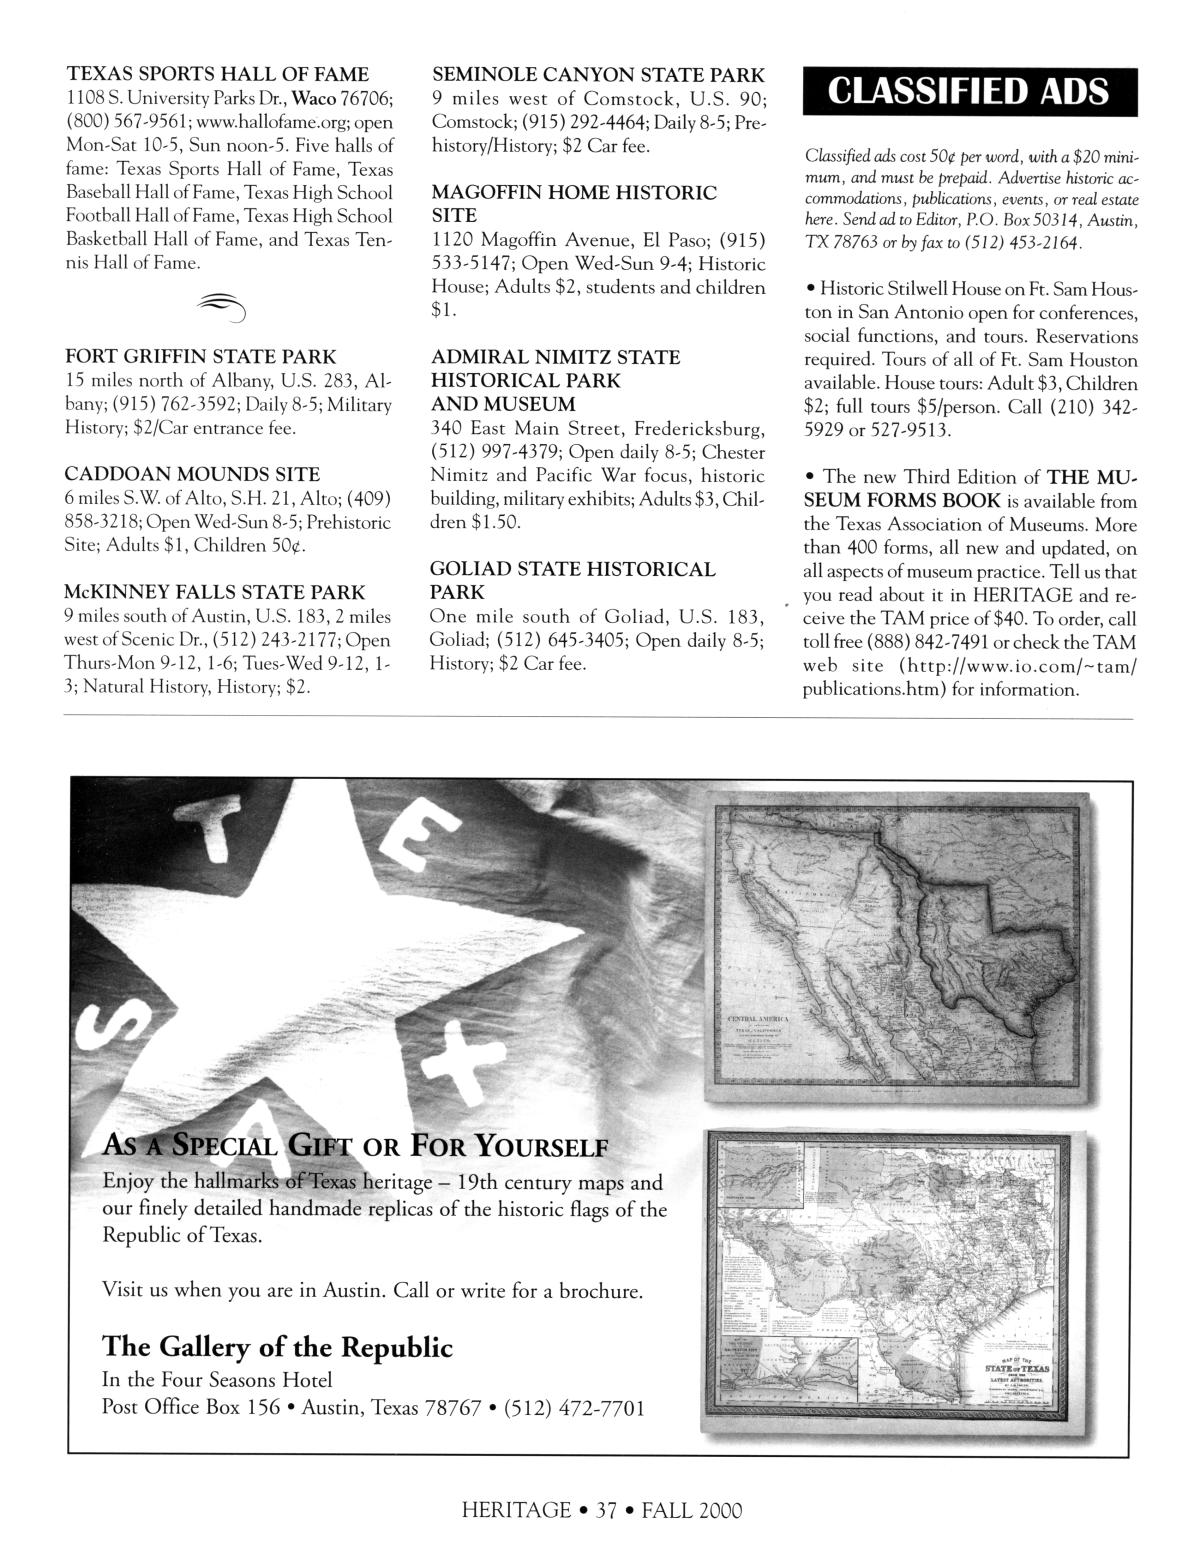 Texas Heritage, Volume 18, Number 4, Fall 2000
                                                
                                                    37
                                                